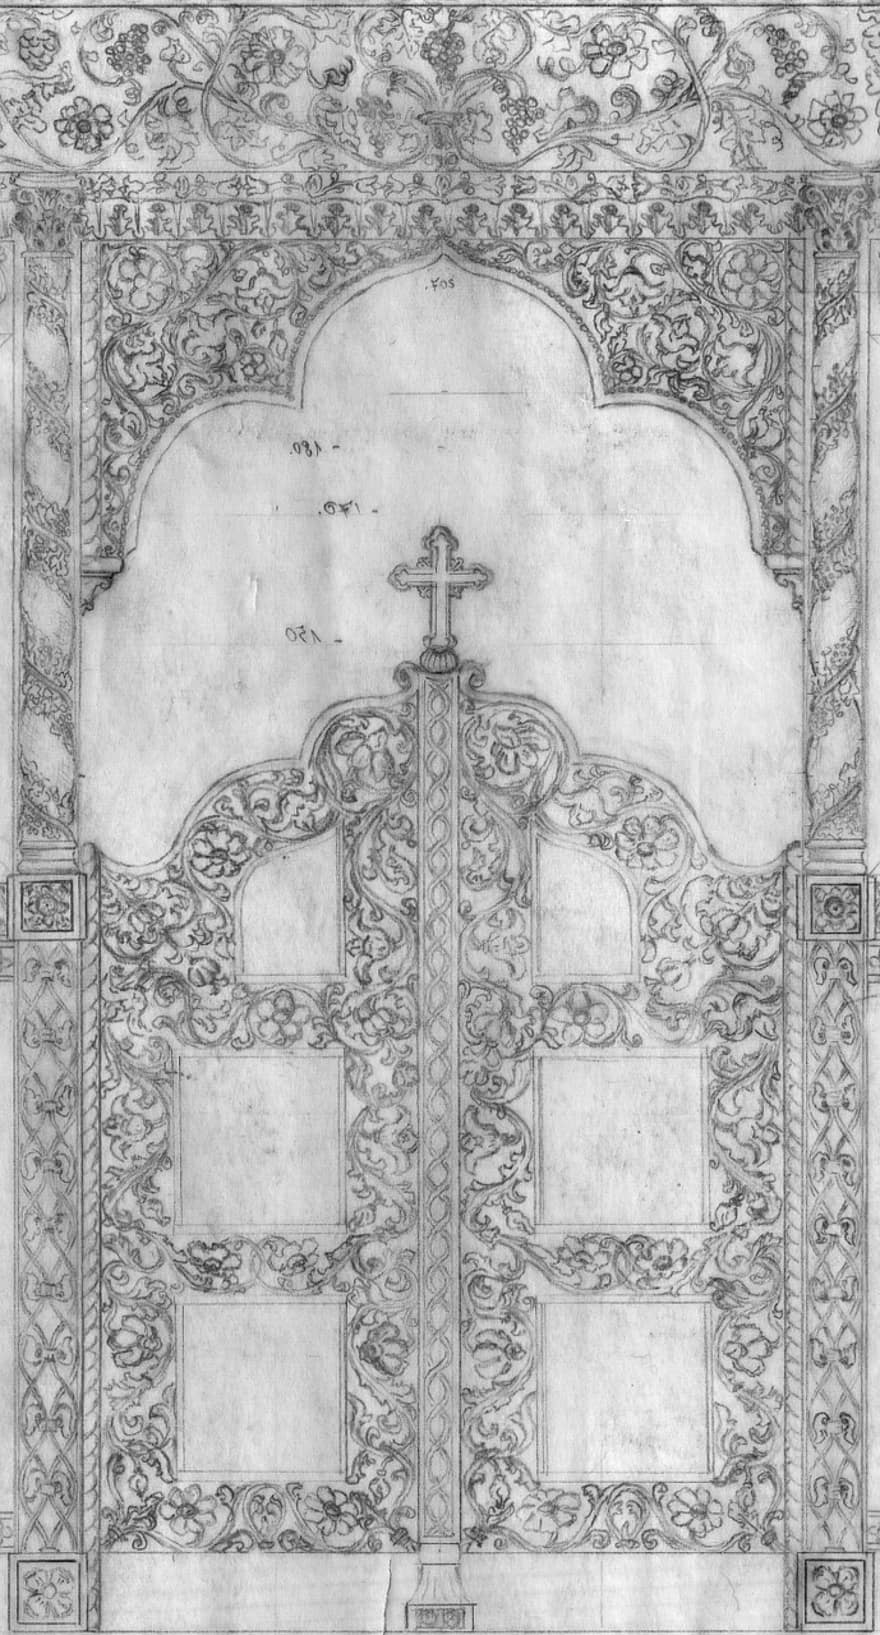 iconostasio, Altar del iconostasio, Puerta del altar, puerta de la iglesia, Iglesia, entrada, arquitectura, Gol, puerta de madera, portal, talla de madera